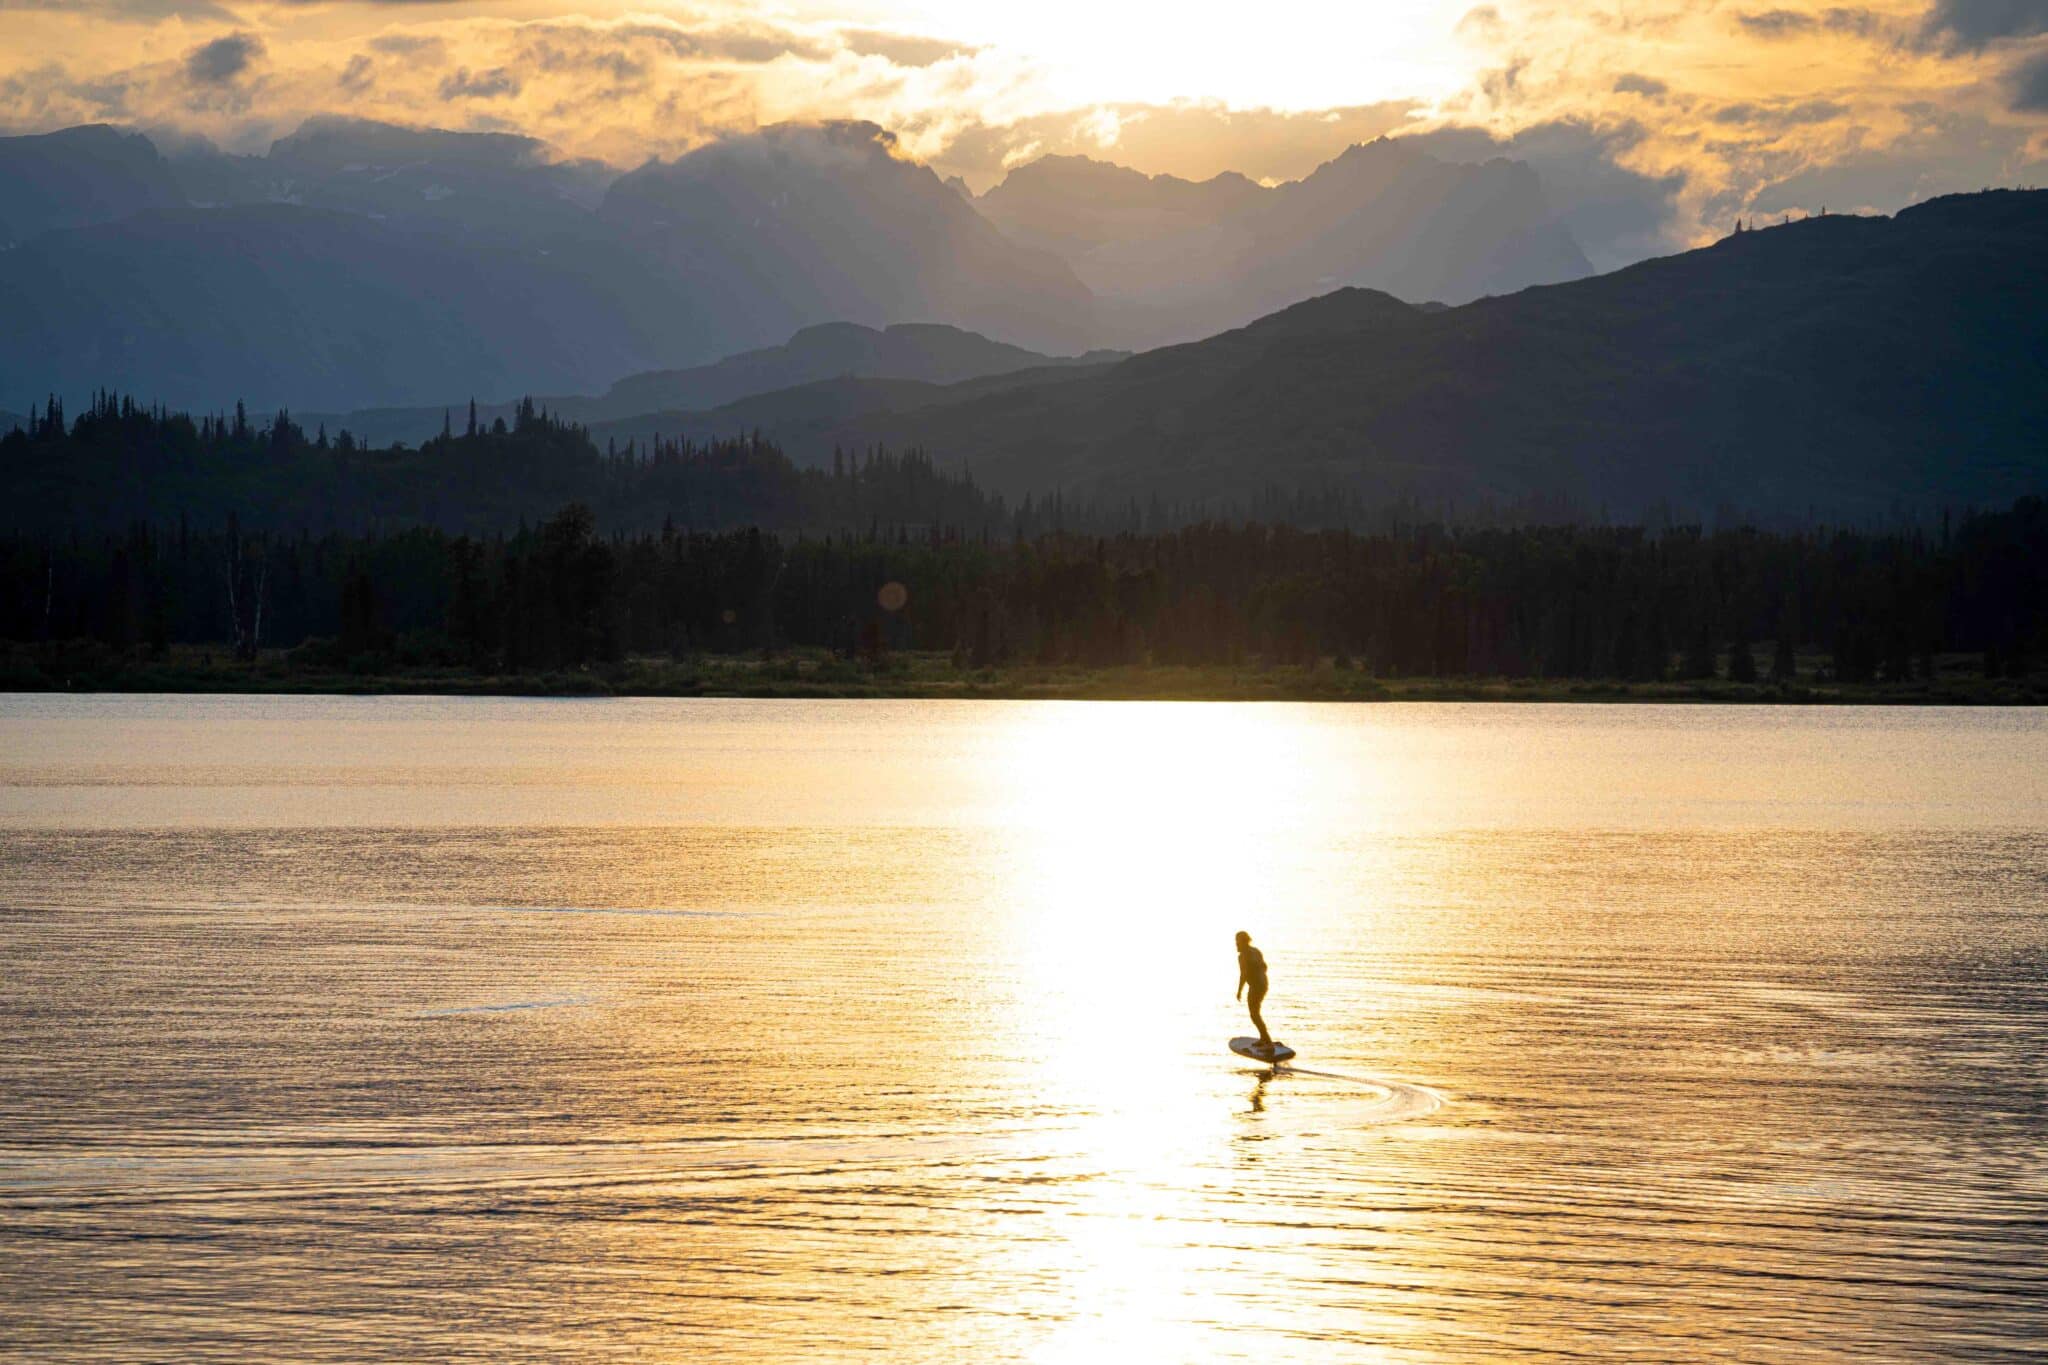 e-foil alaska at sunset judd lake